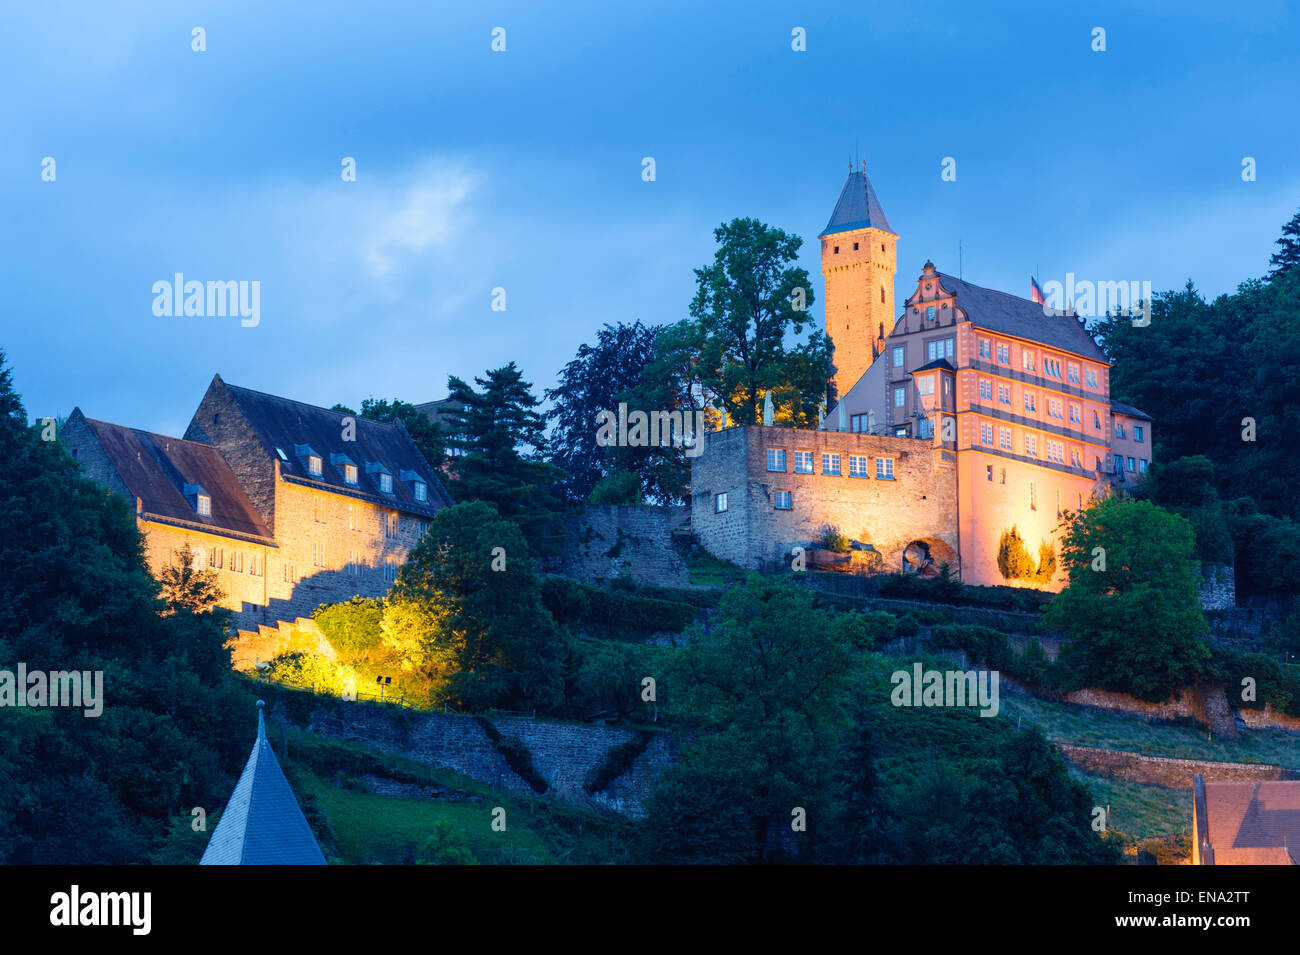 Hirschhorn Castle at dusk, Hirschhorn, Neckar, Hessen, Germany Stock Photo